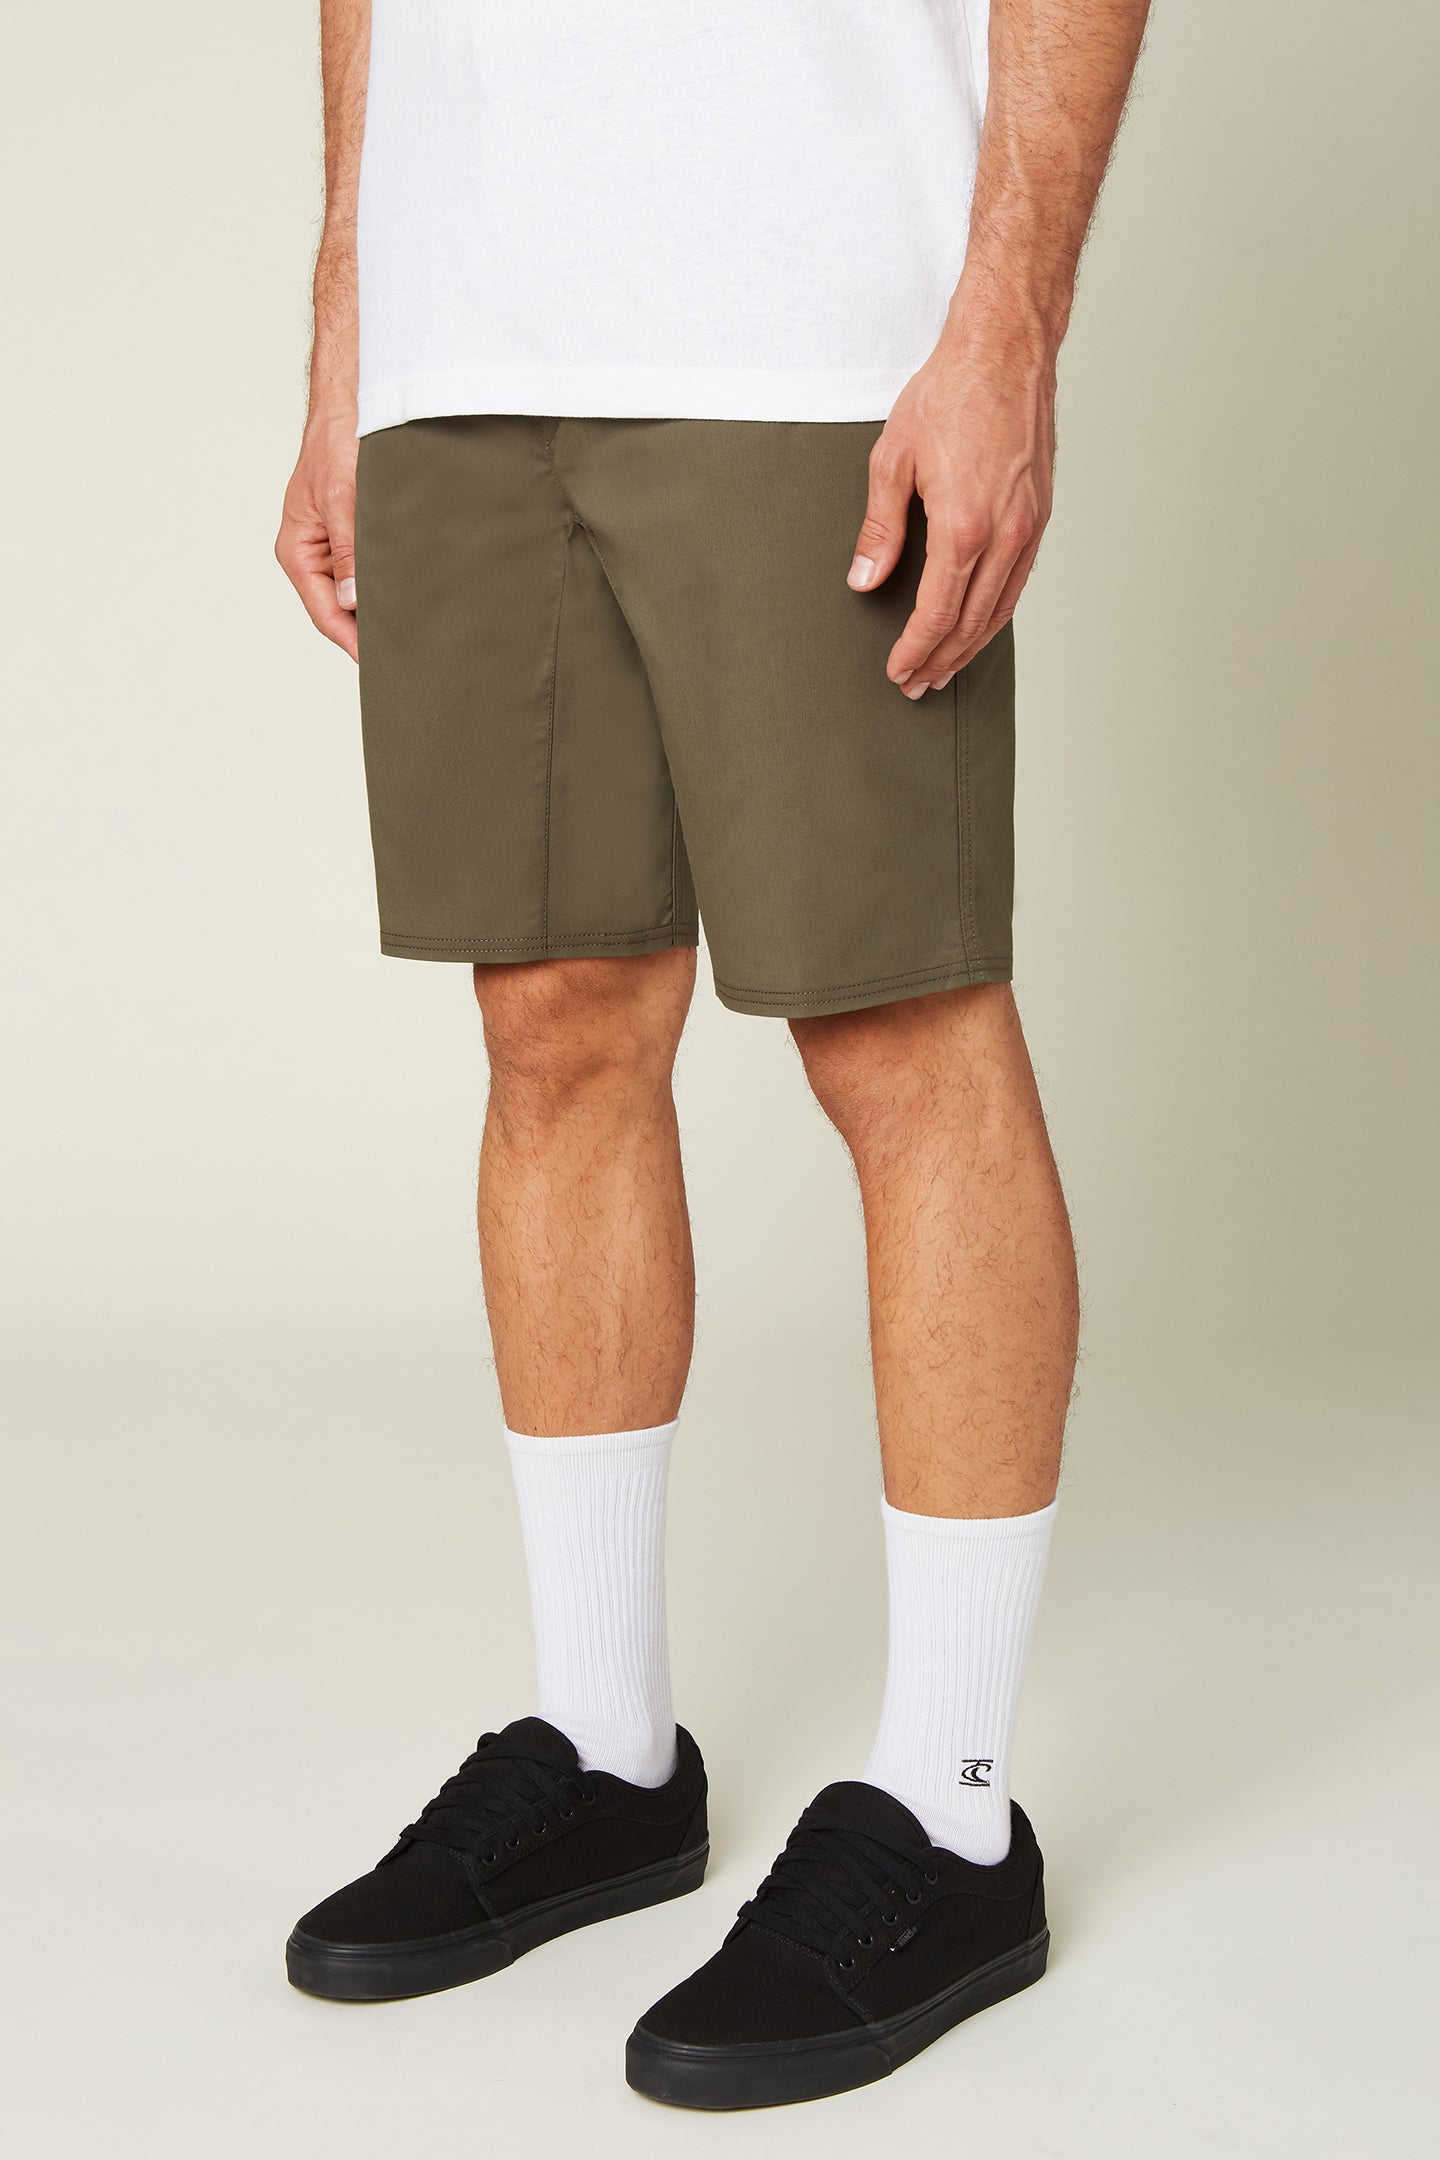 nike boondocks shorts